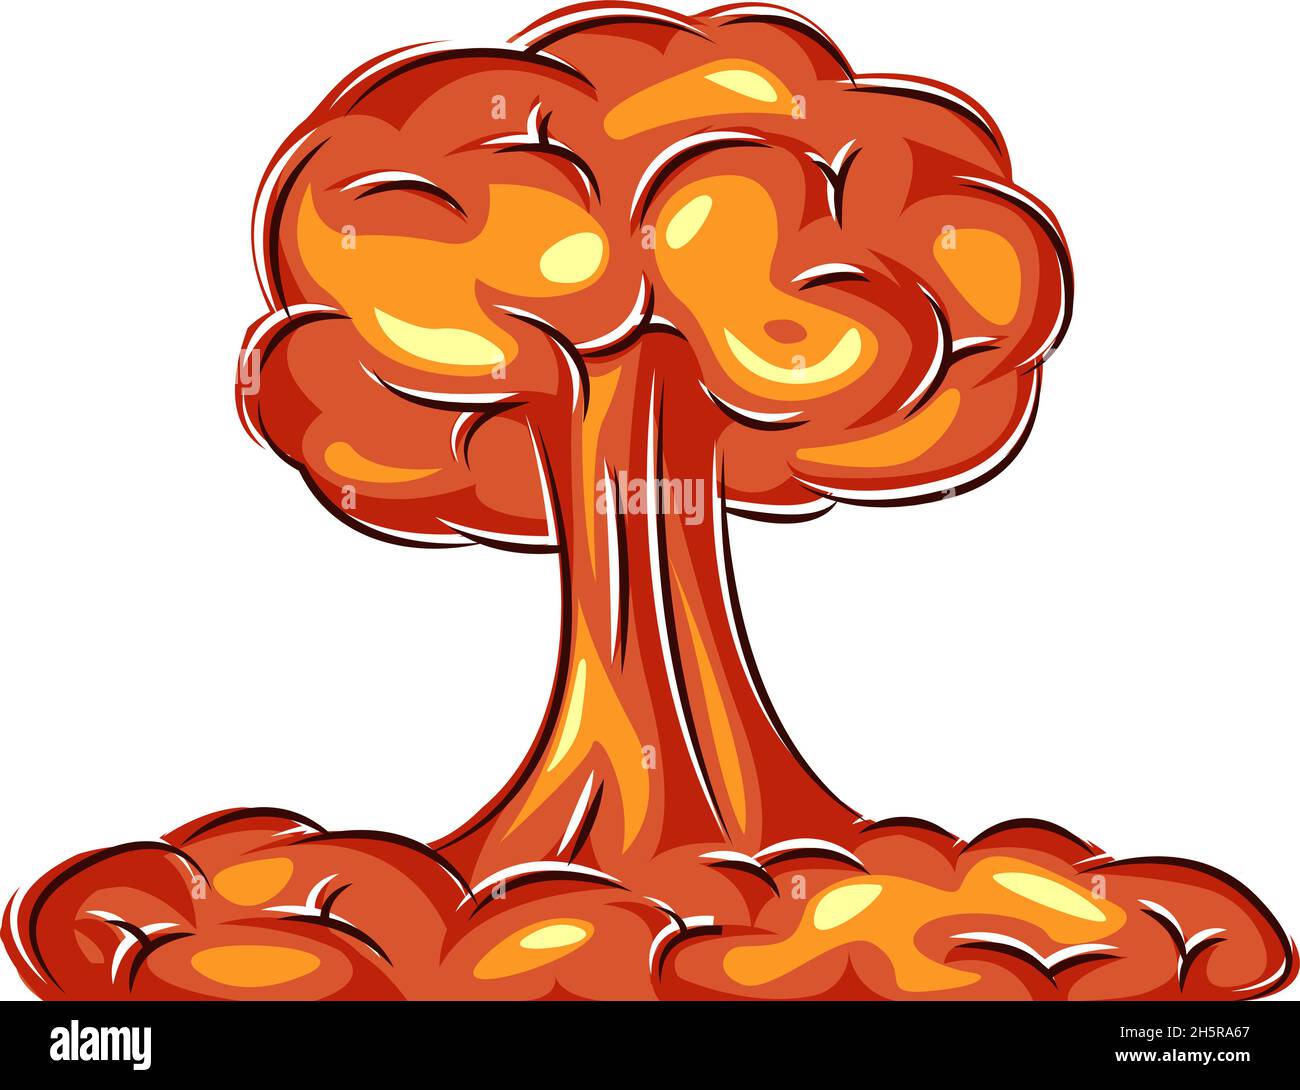 Pop Art Stil nukleare Explosion, Vektor-flache Illustration Stock Vektor